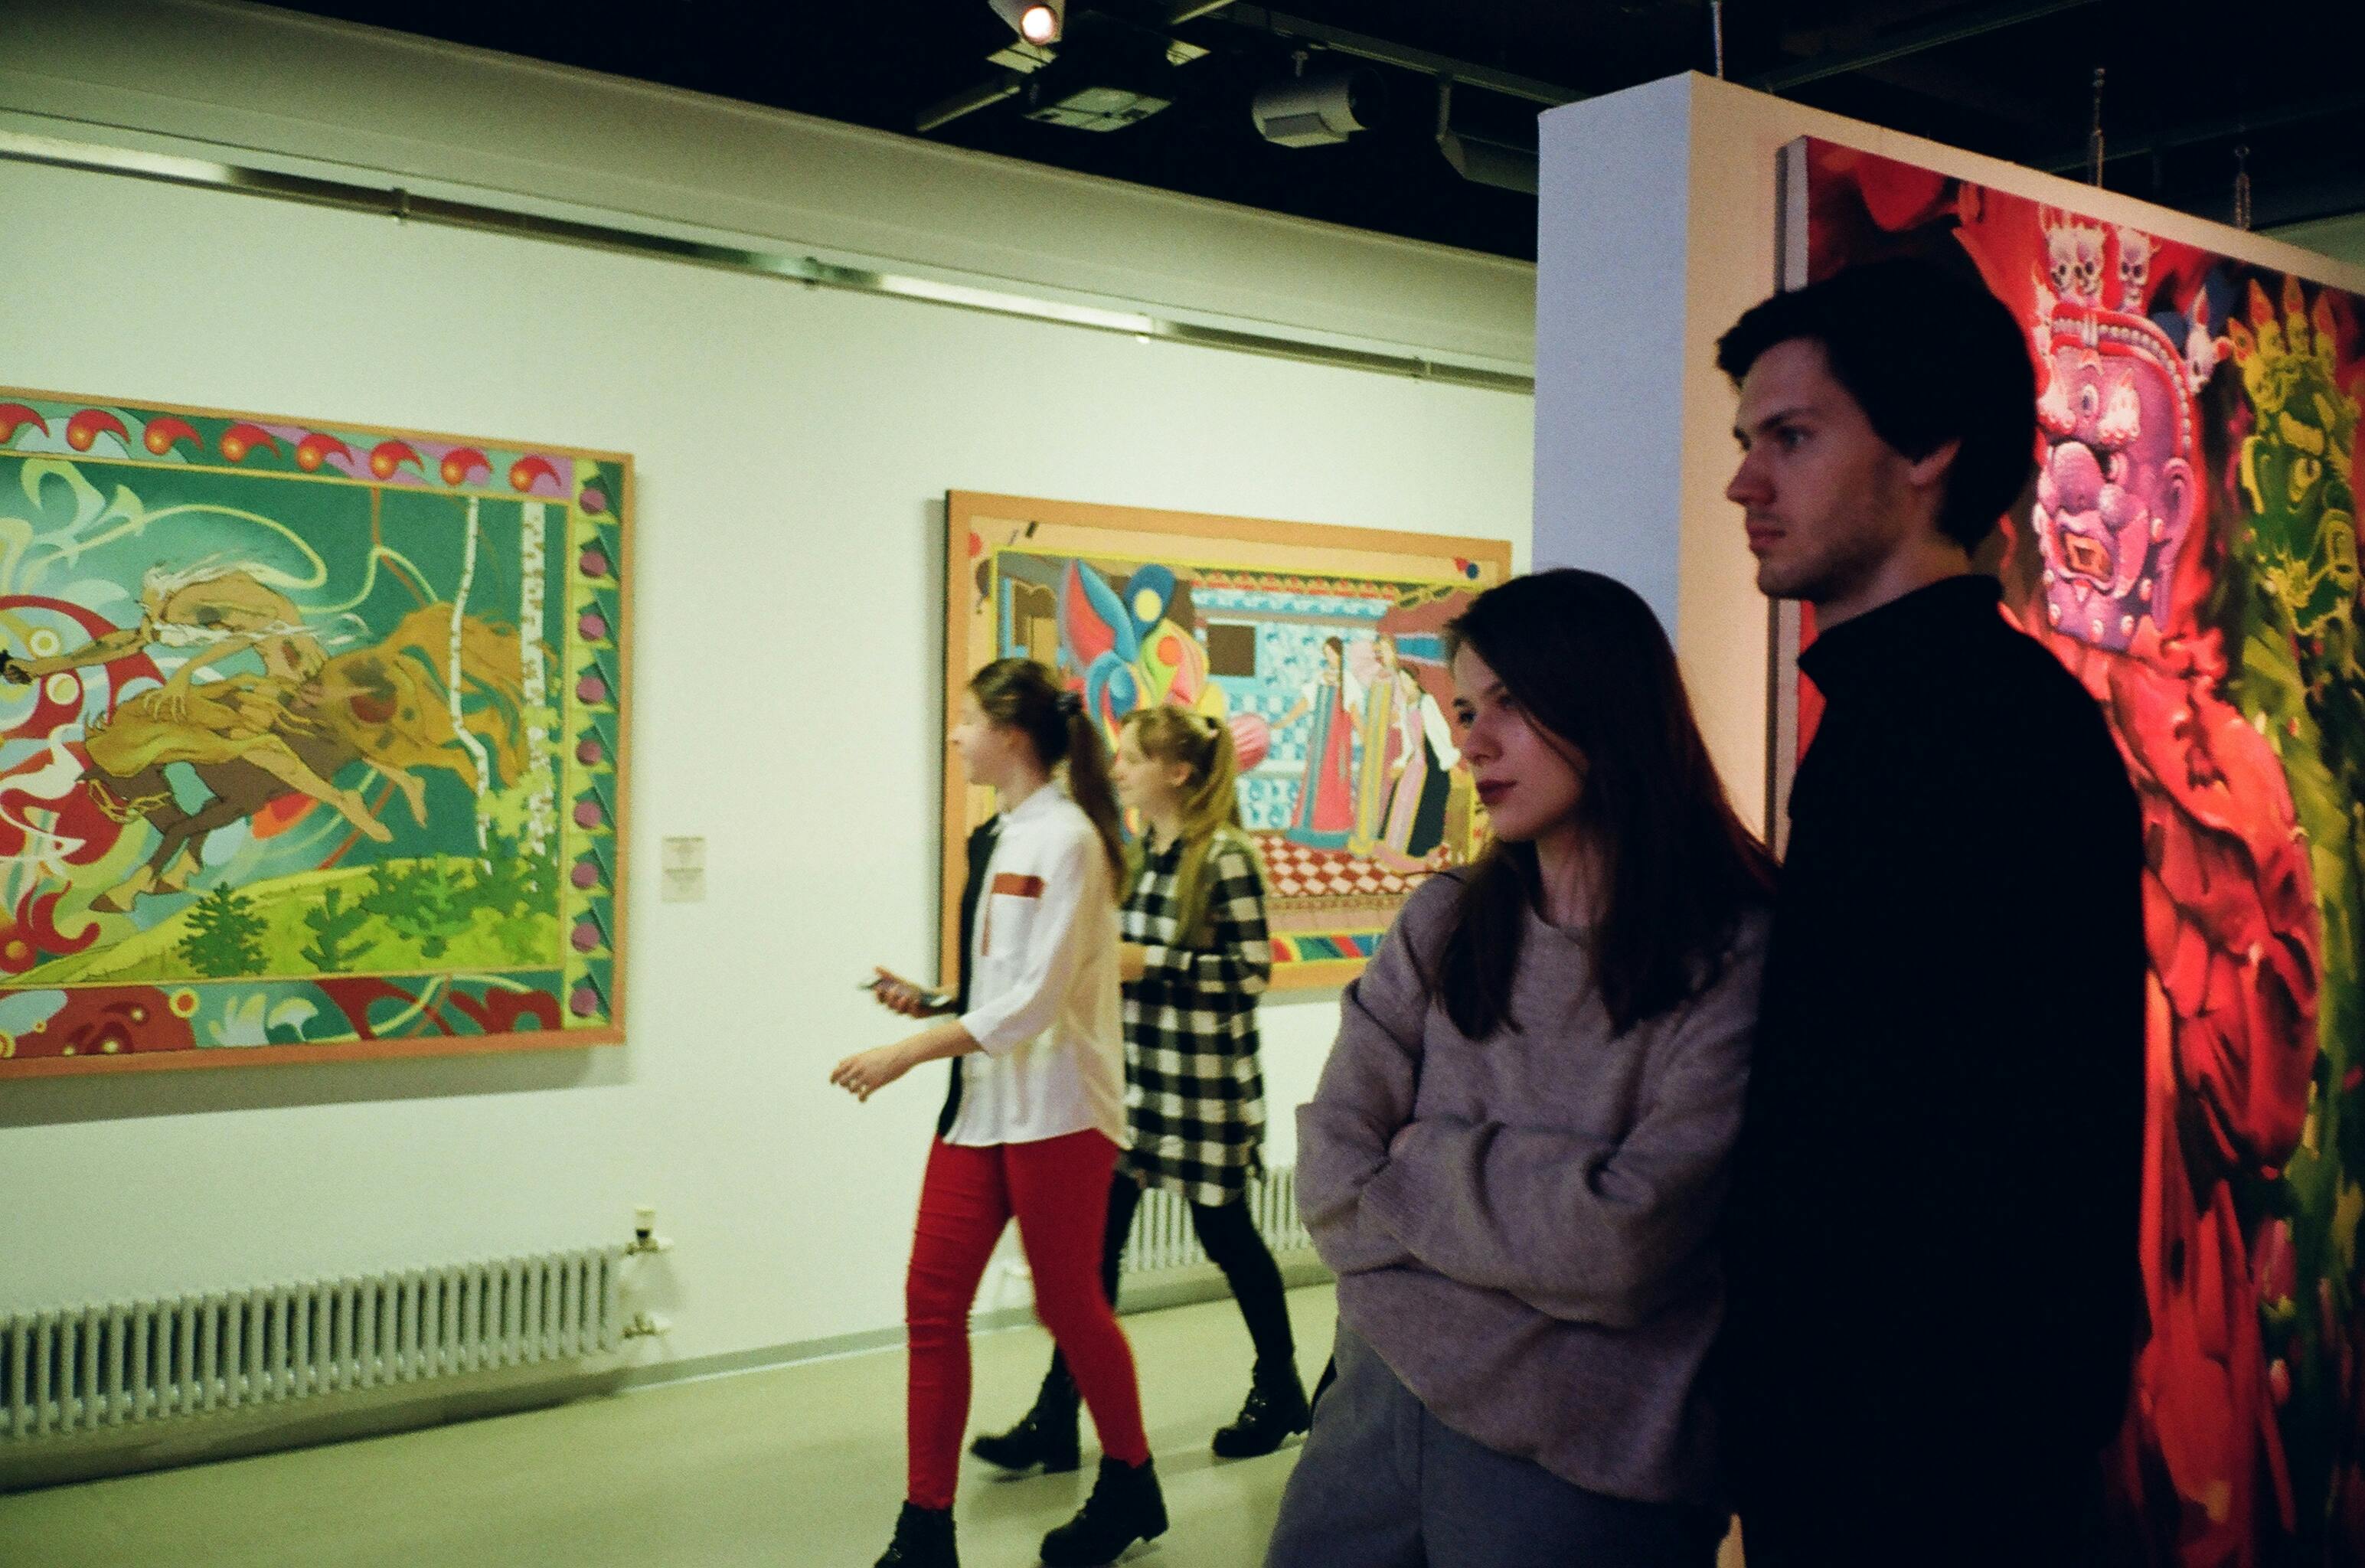 Patrons walk through an art exhibition | Source: Pexels